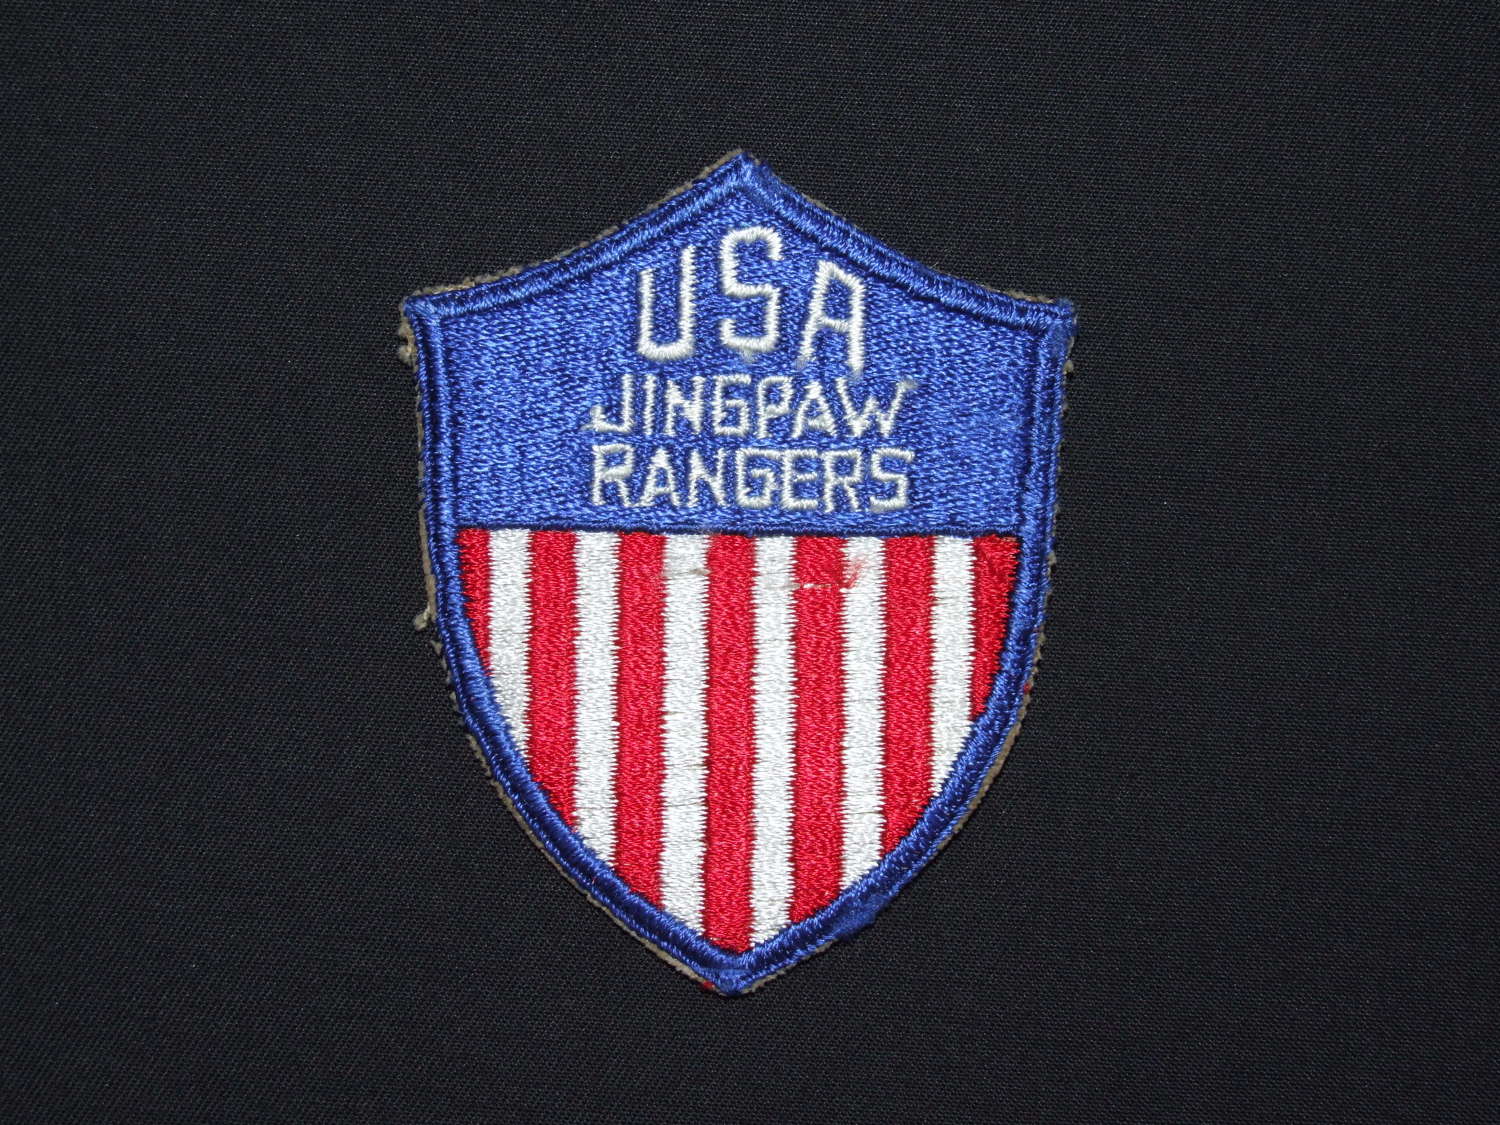 WW11 USA Cloth Formation Sign, Jingpaw Rangers